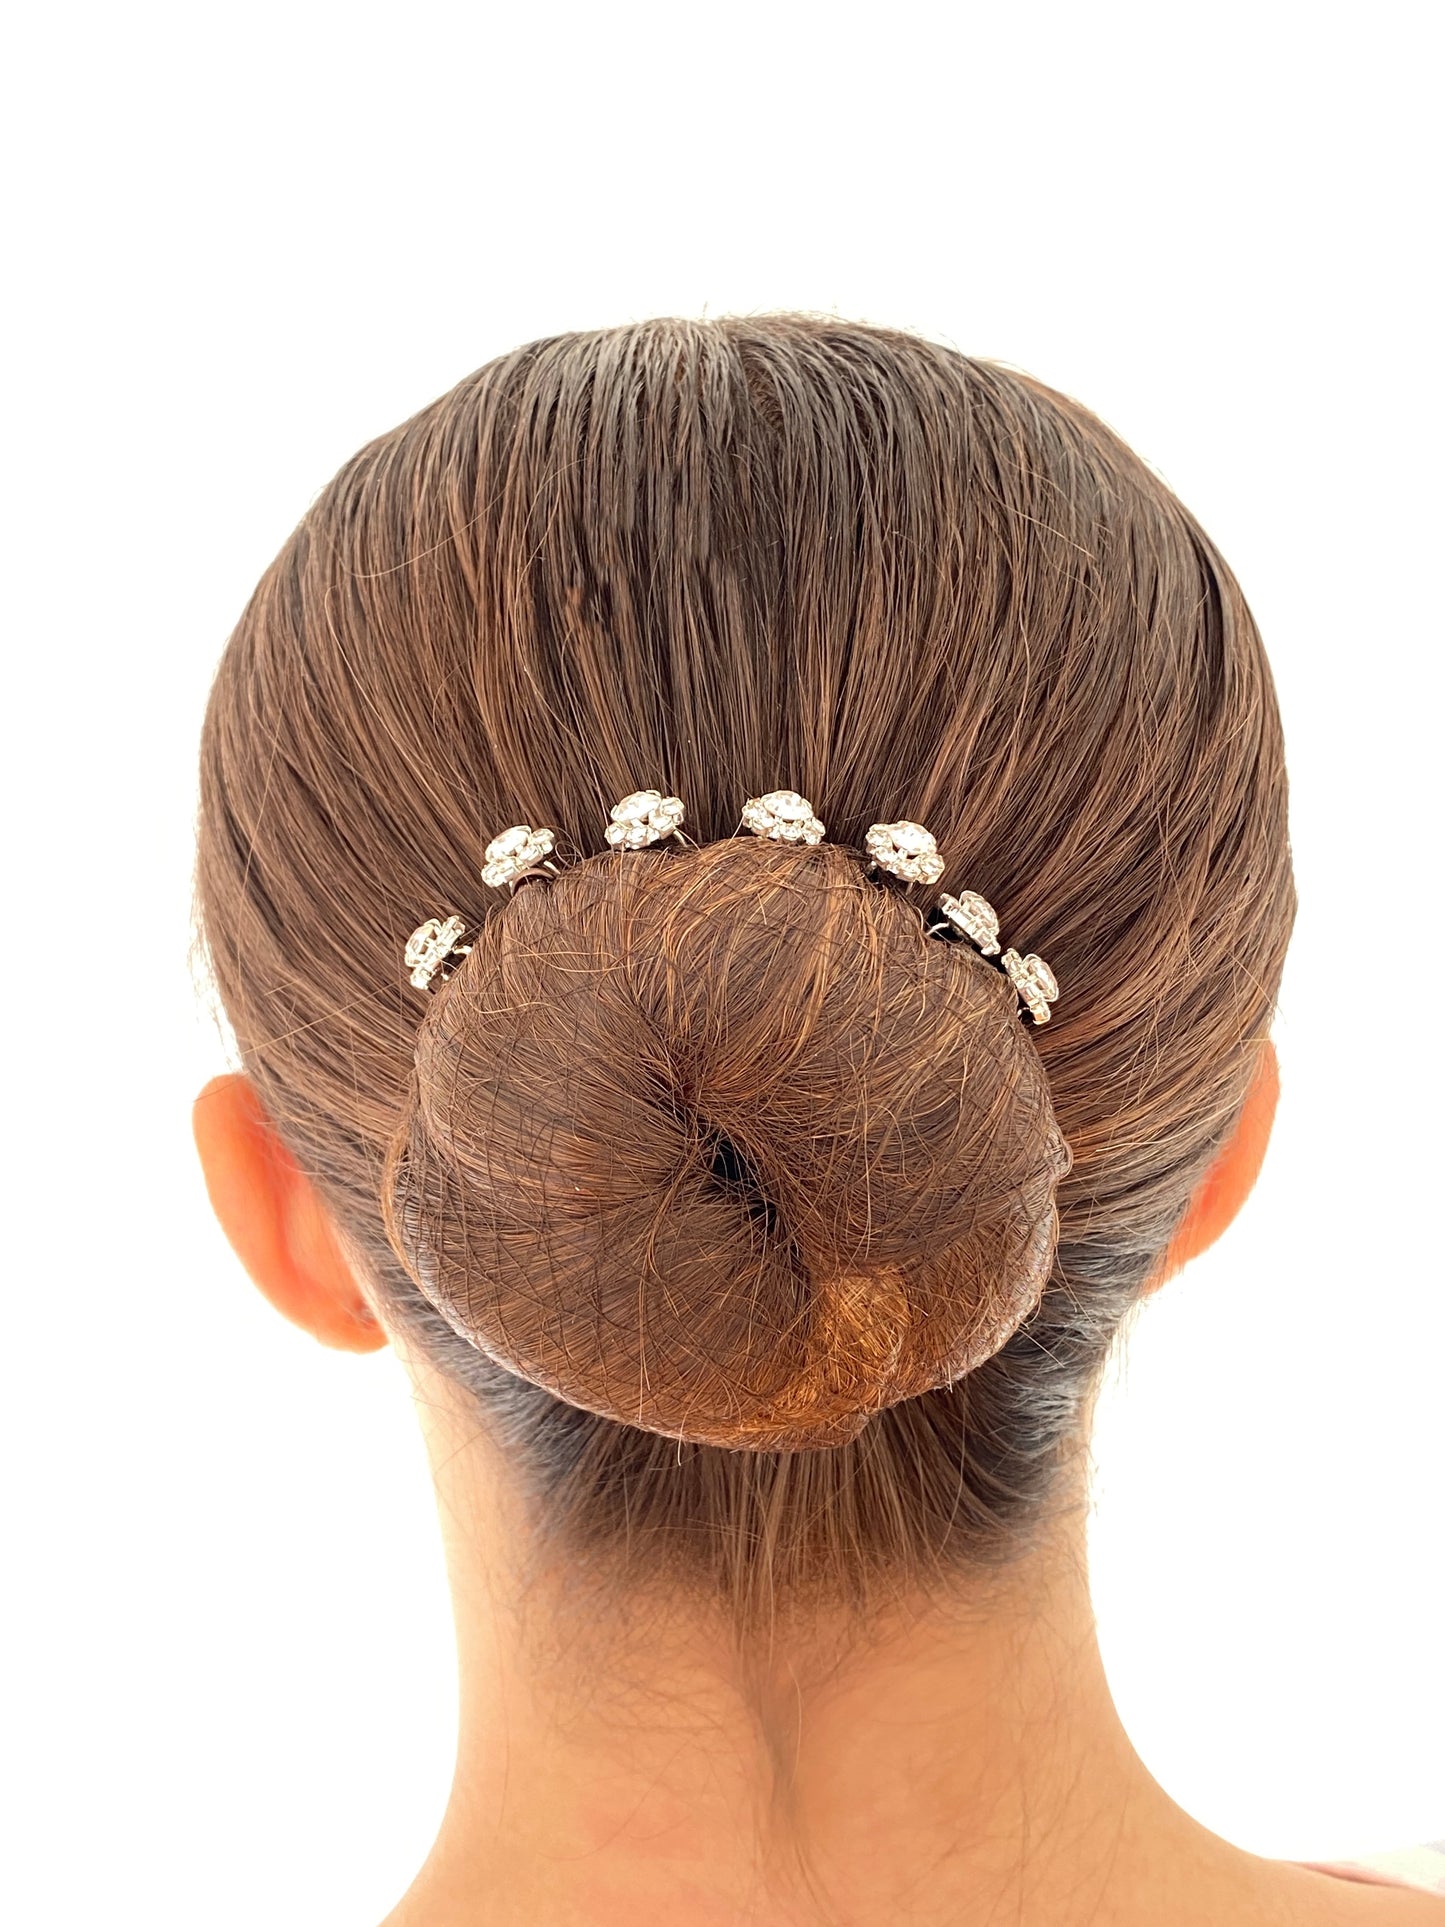 Crystal hairpins for hairdos. Ballet bun, weddings, updos from The Collective Dancewear